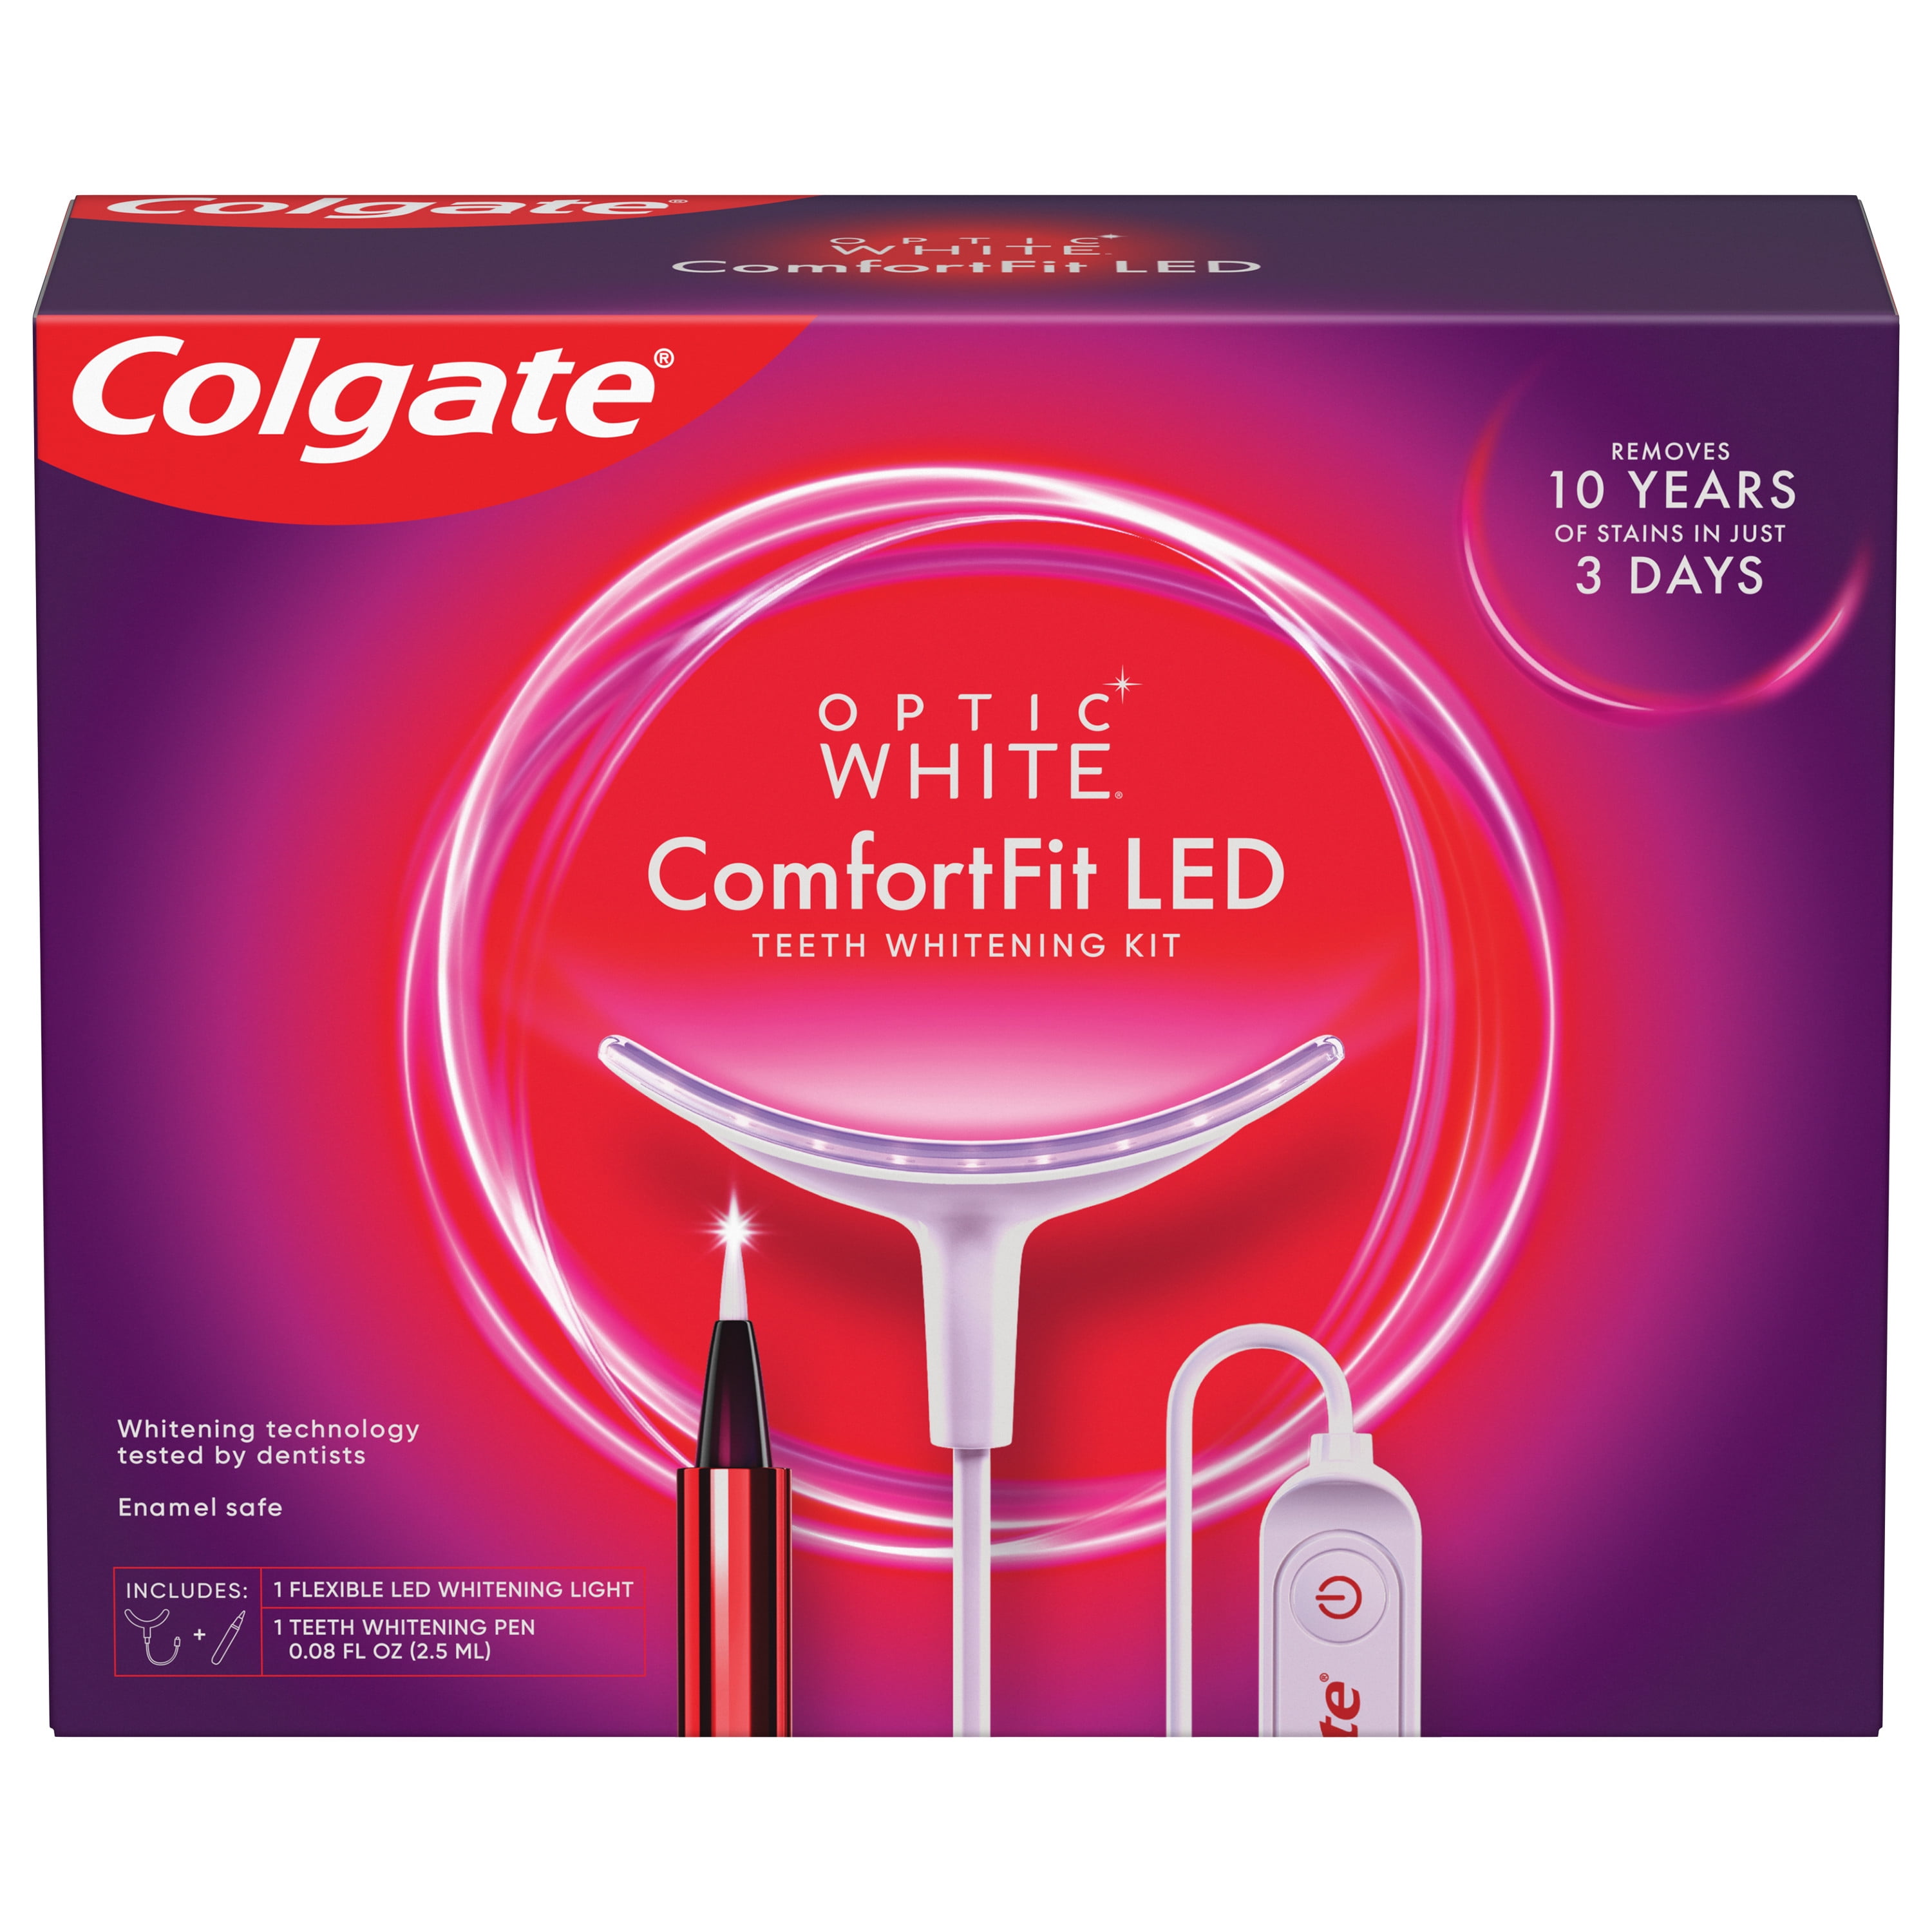 Colgate Optic White ComfortFit LED Teeth Whitening Kit with LED Light and Whitening Pen